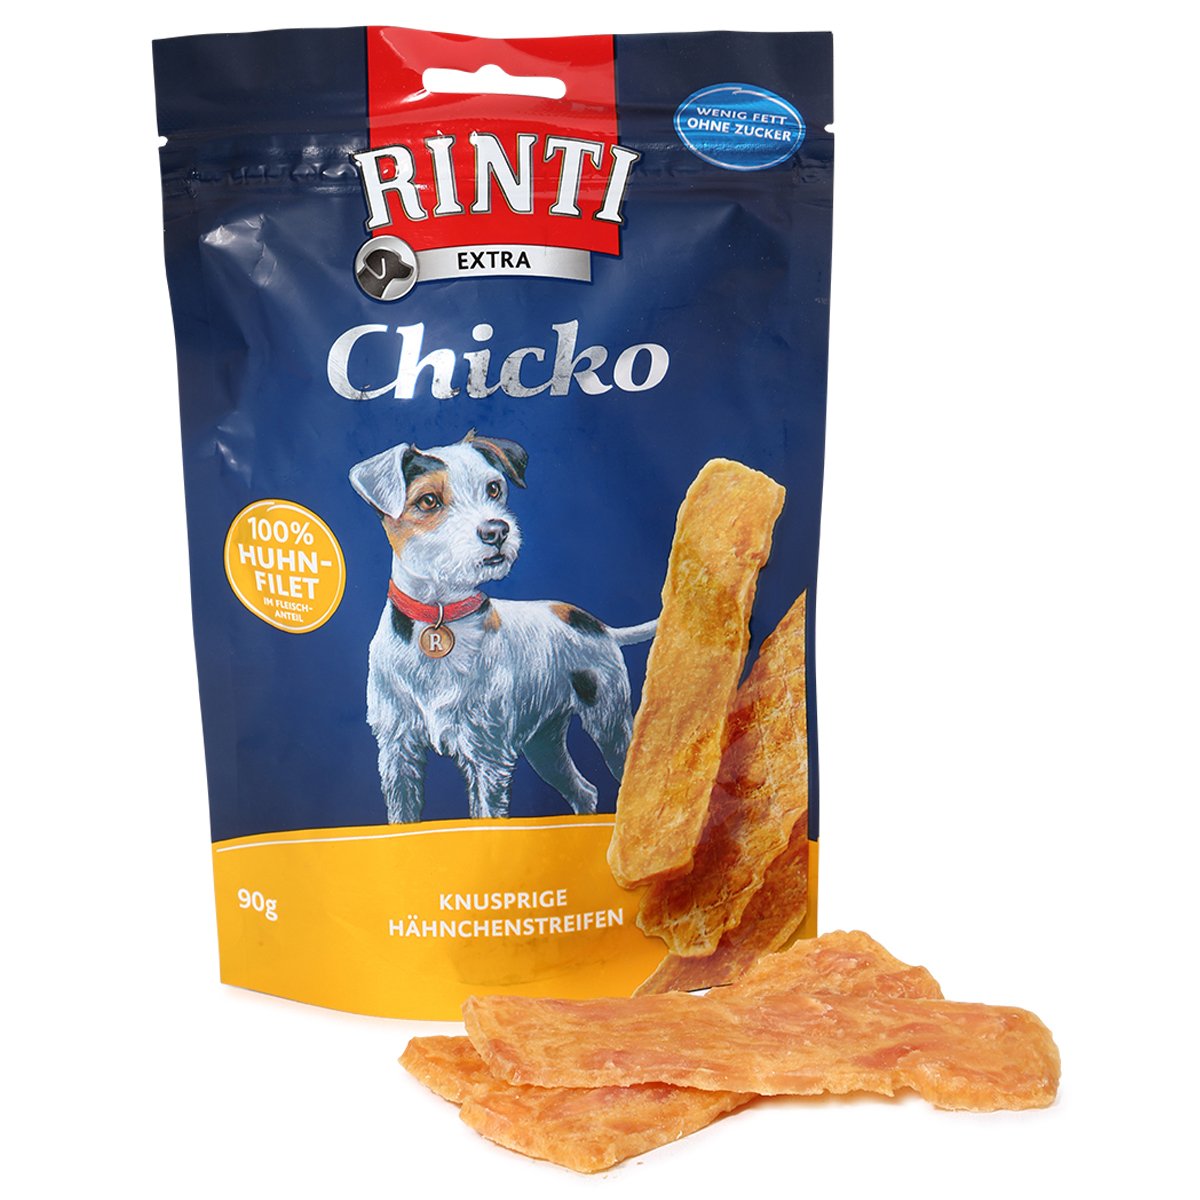 Rinti Hundesnack Extra Chicko 100% Huhnfilet 90g